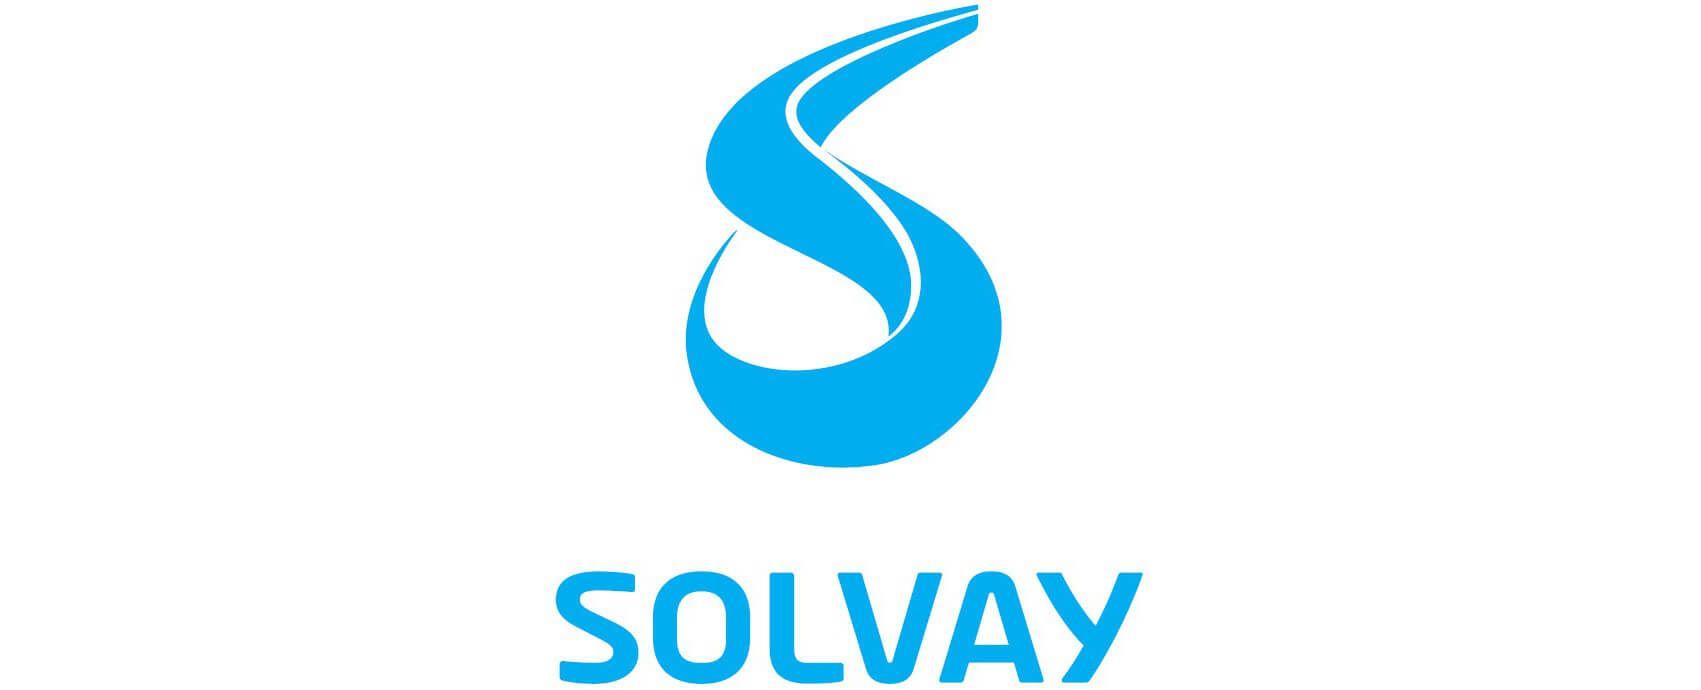 Solvay Logo - Solvay Logos